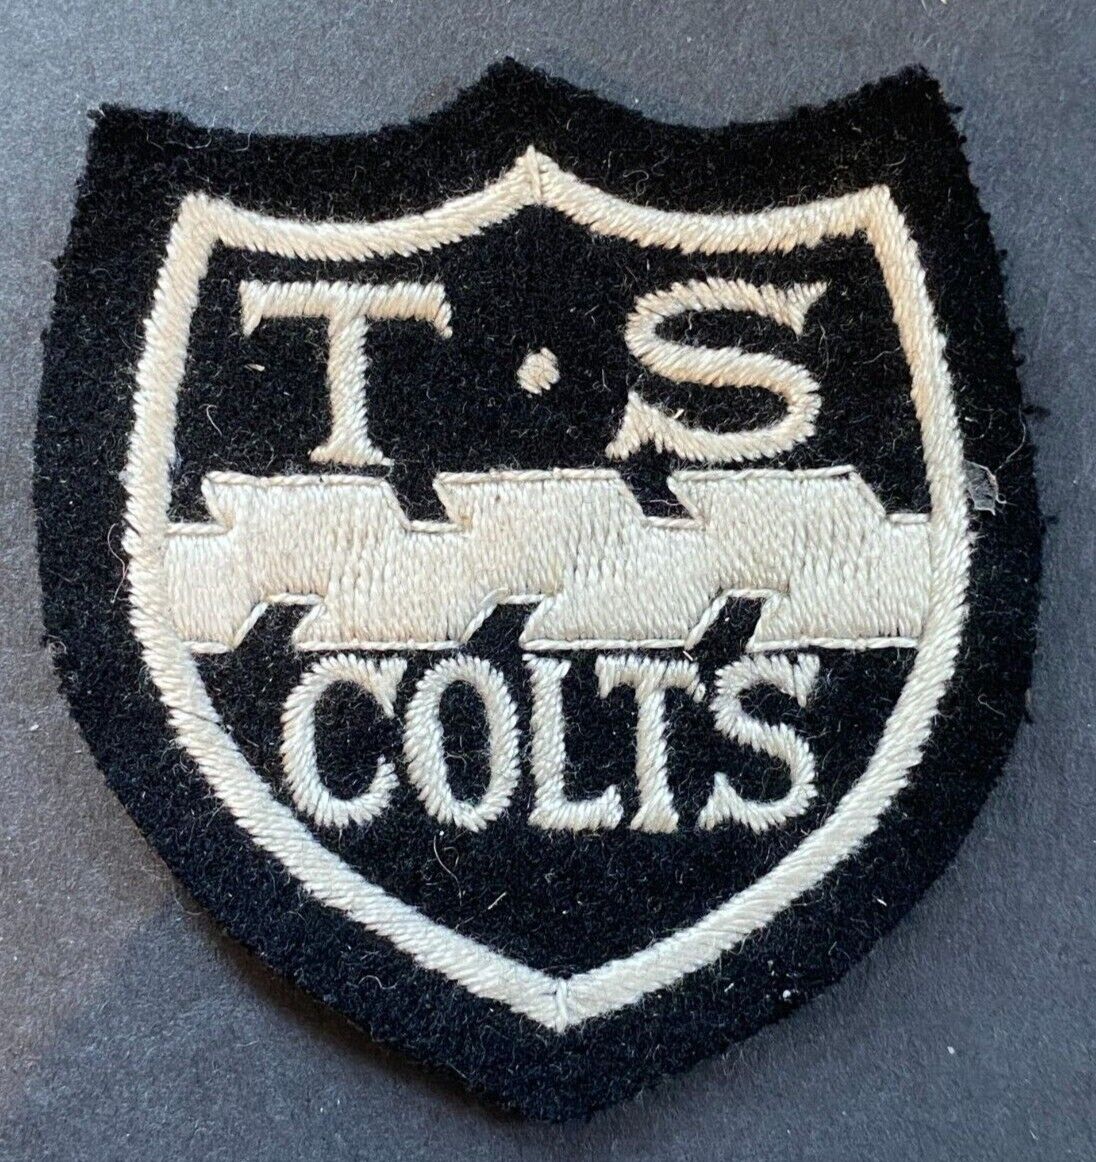 TS Colts Cloth Patch Vintage Lot 1030